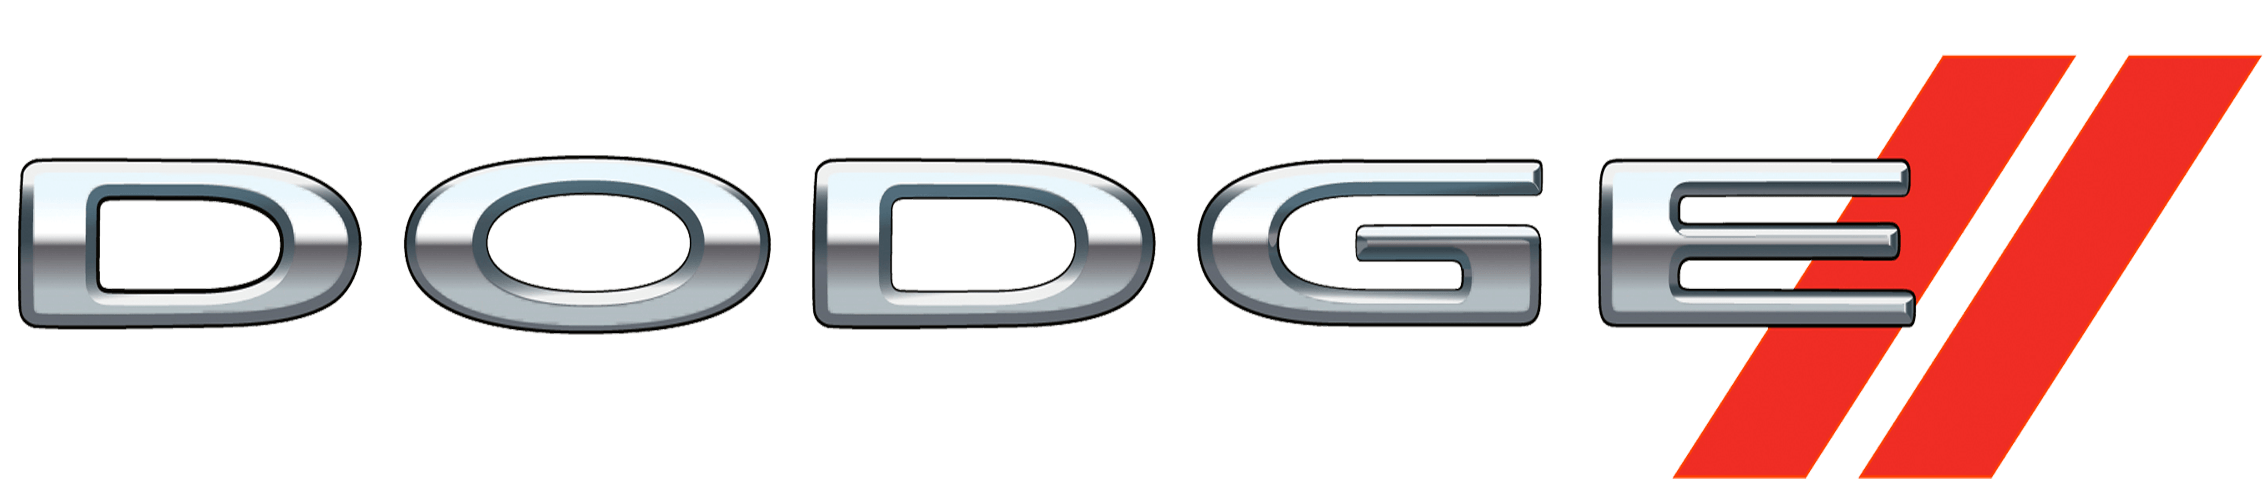 Dodge Logo - Dodge Logo Meaning and History, latest models | World Cars Brands